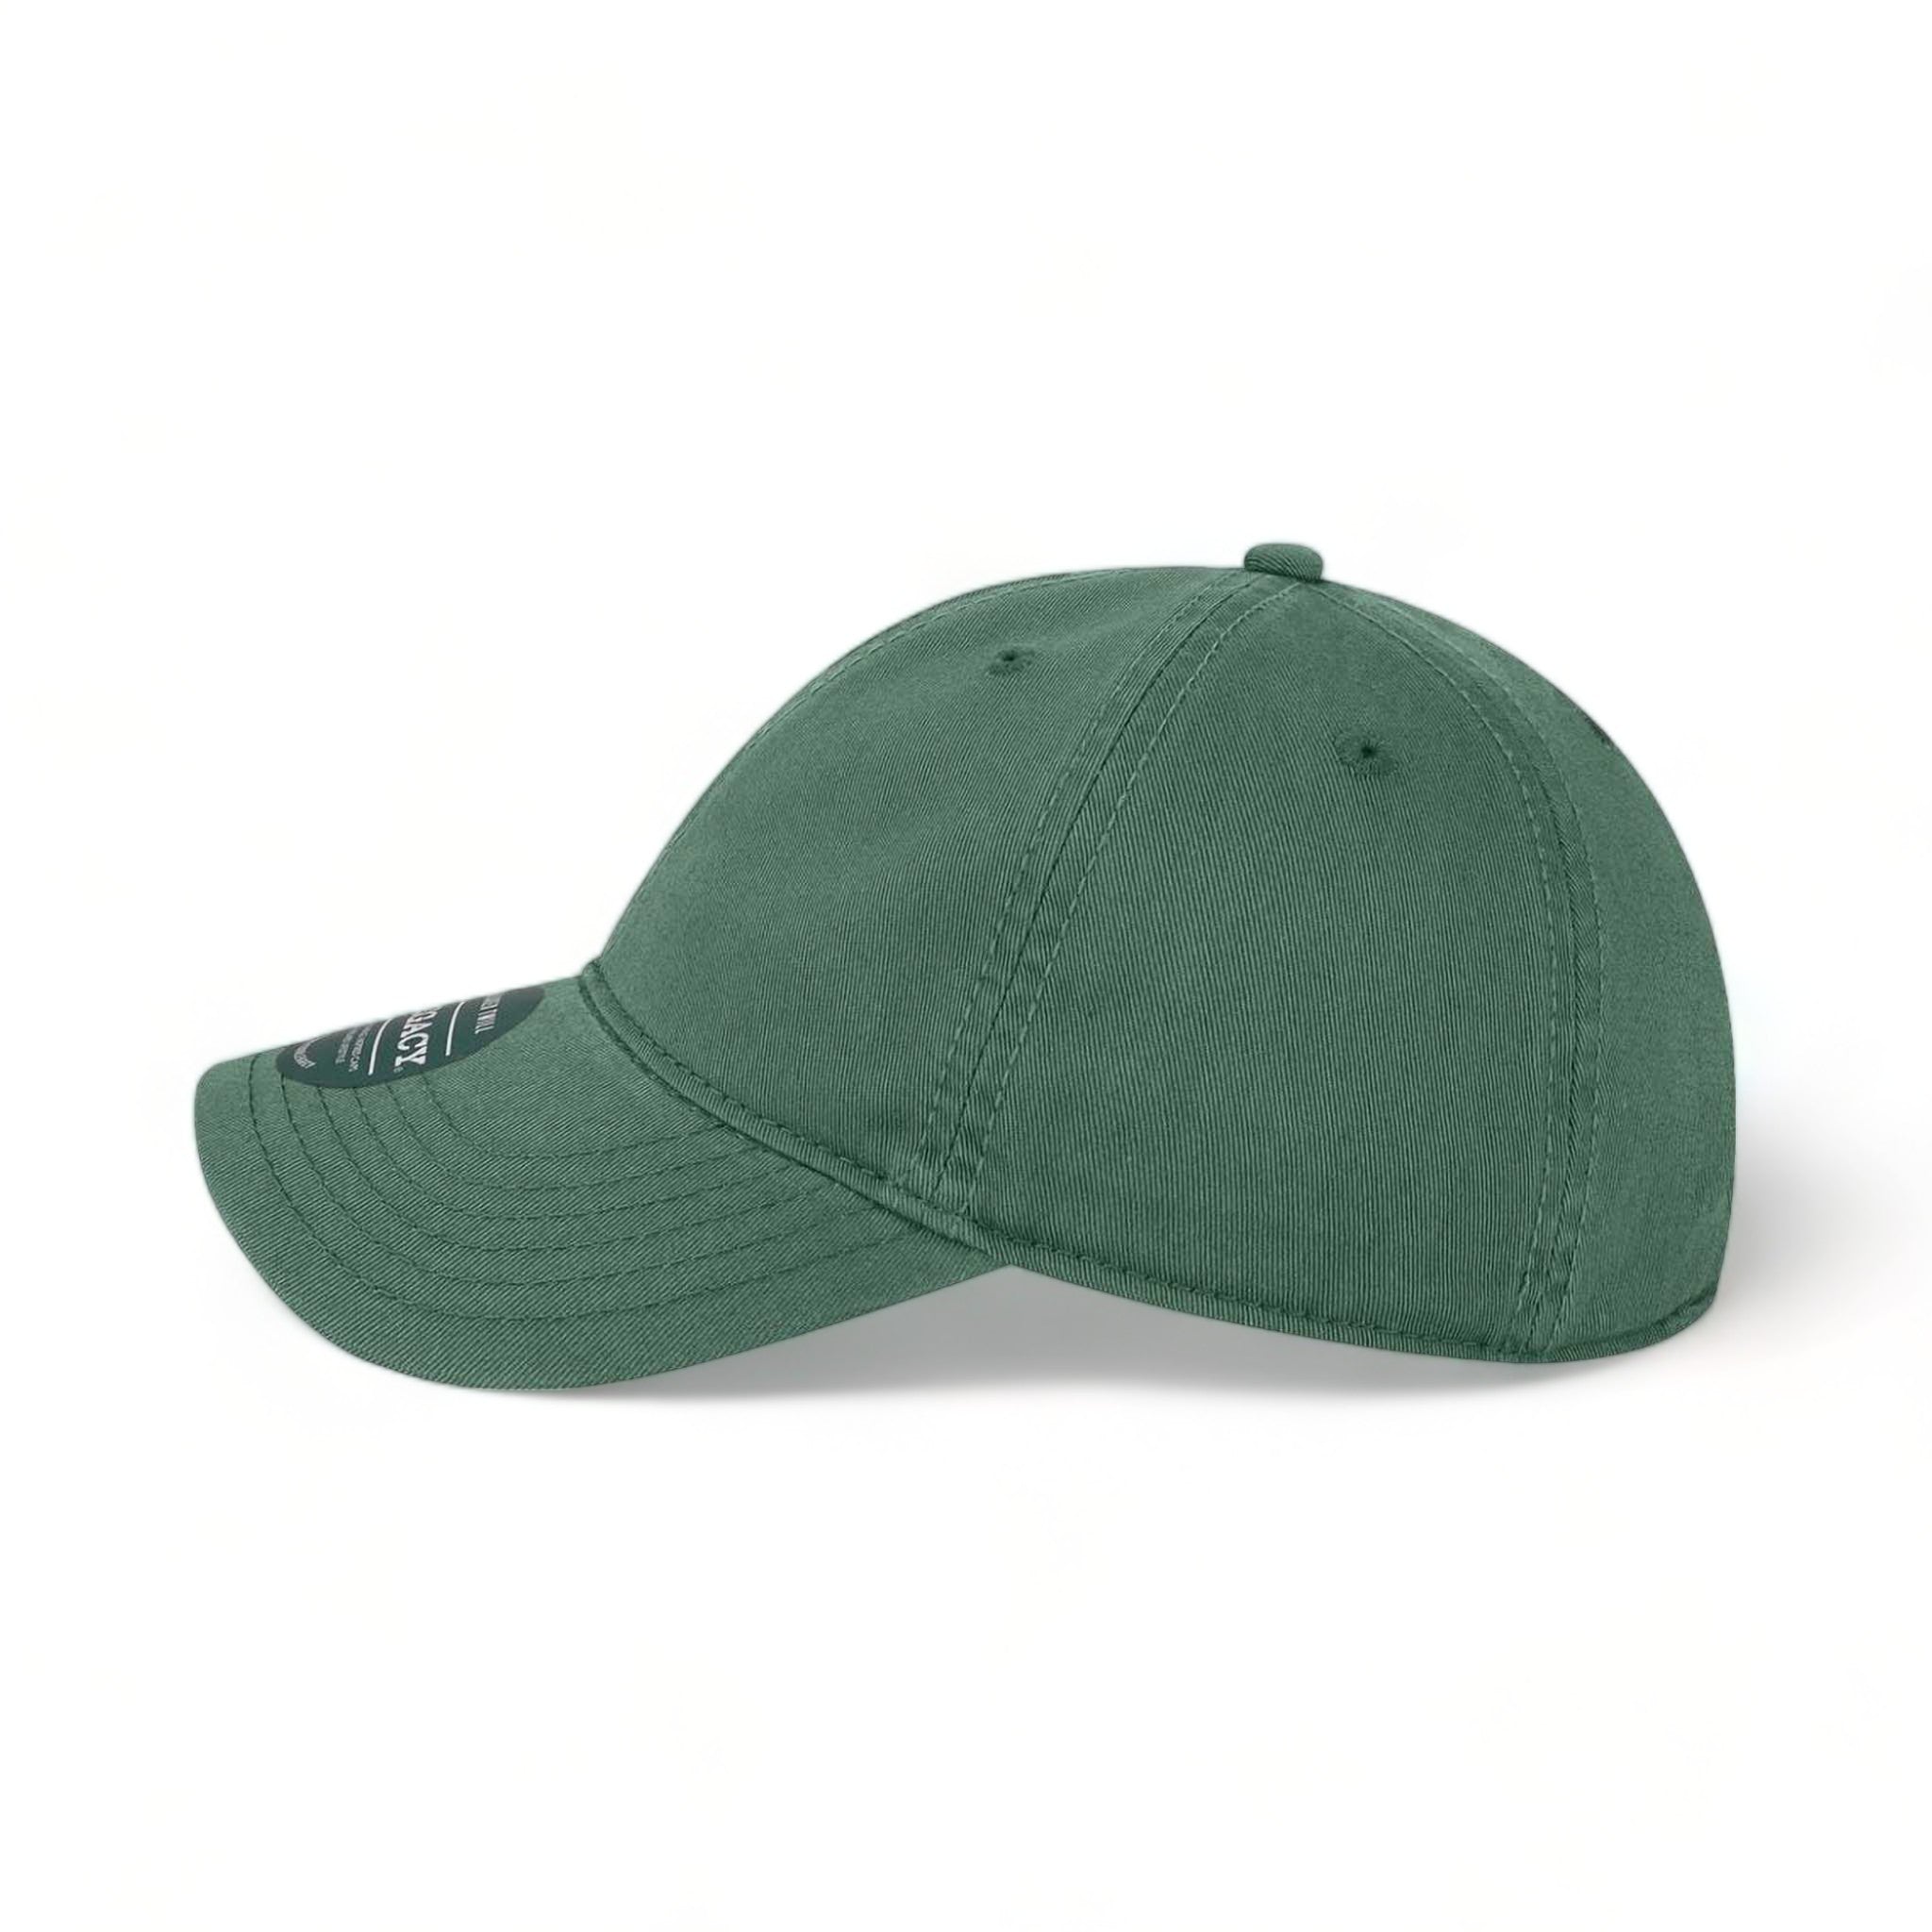 Side view of LEGACY EZA custom hat in spruce green